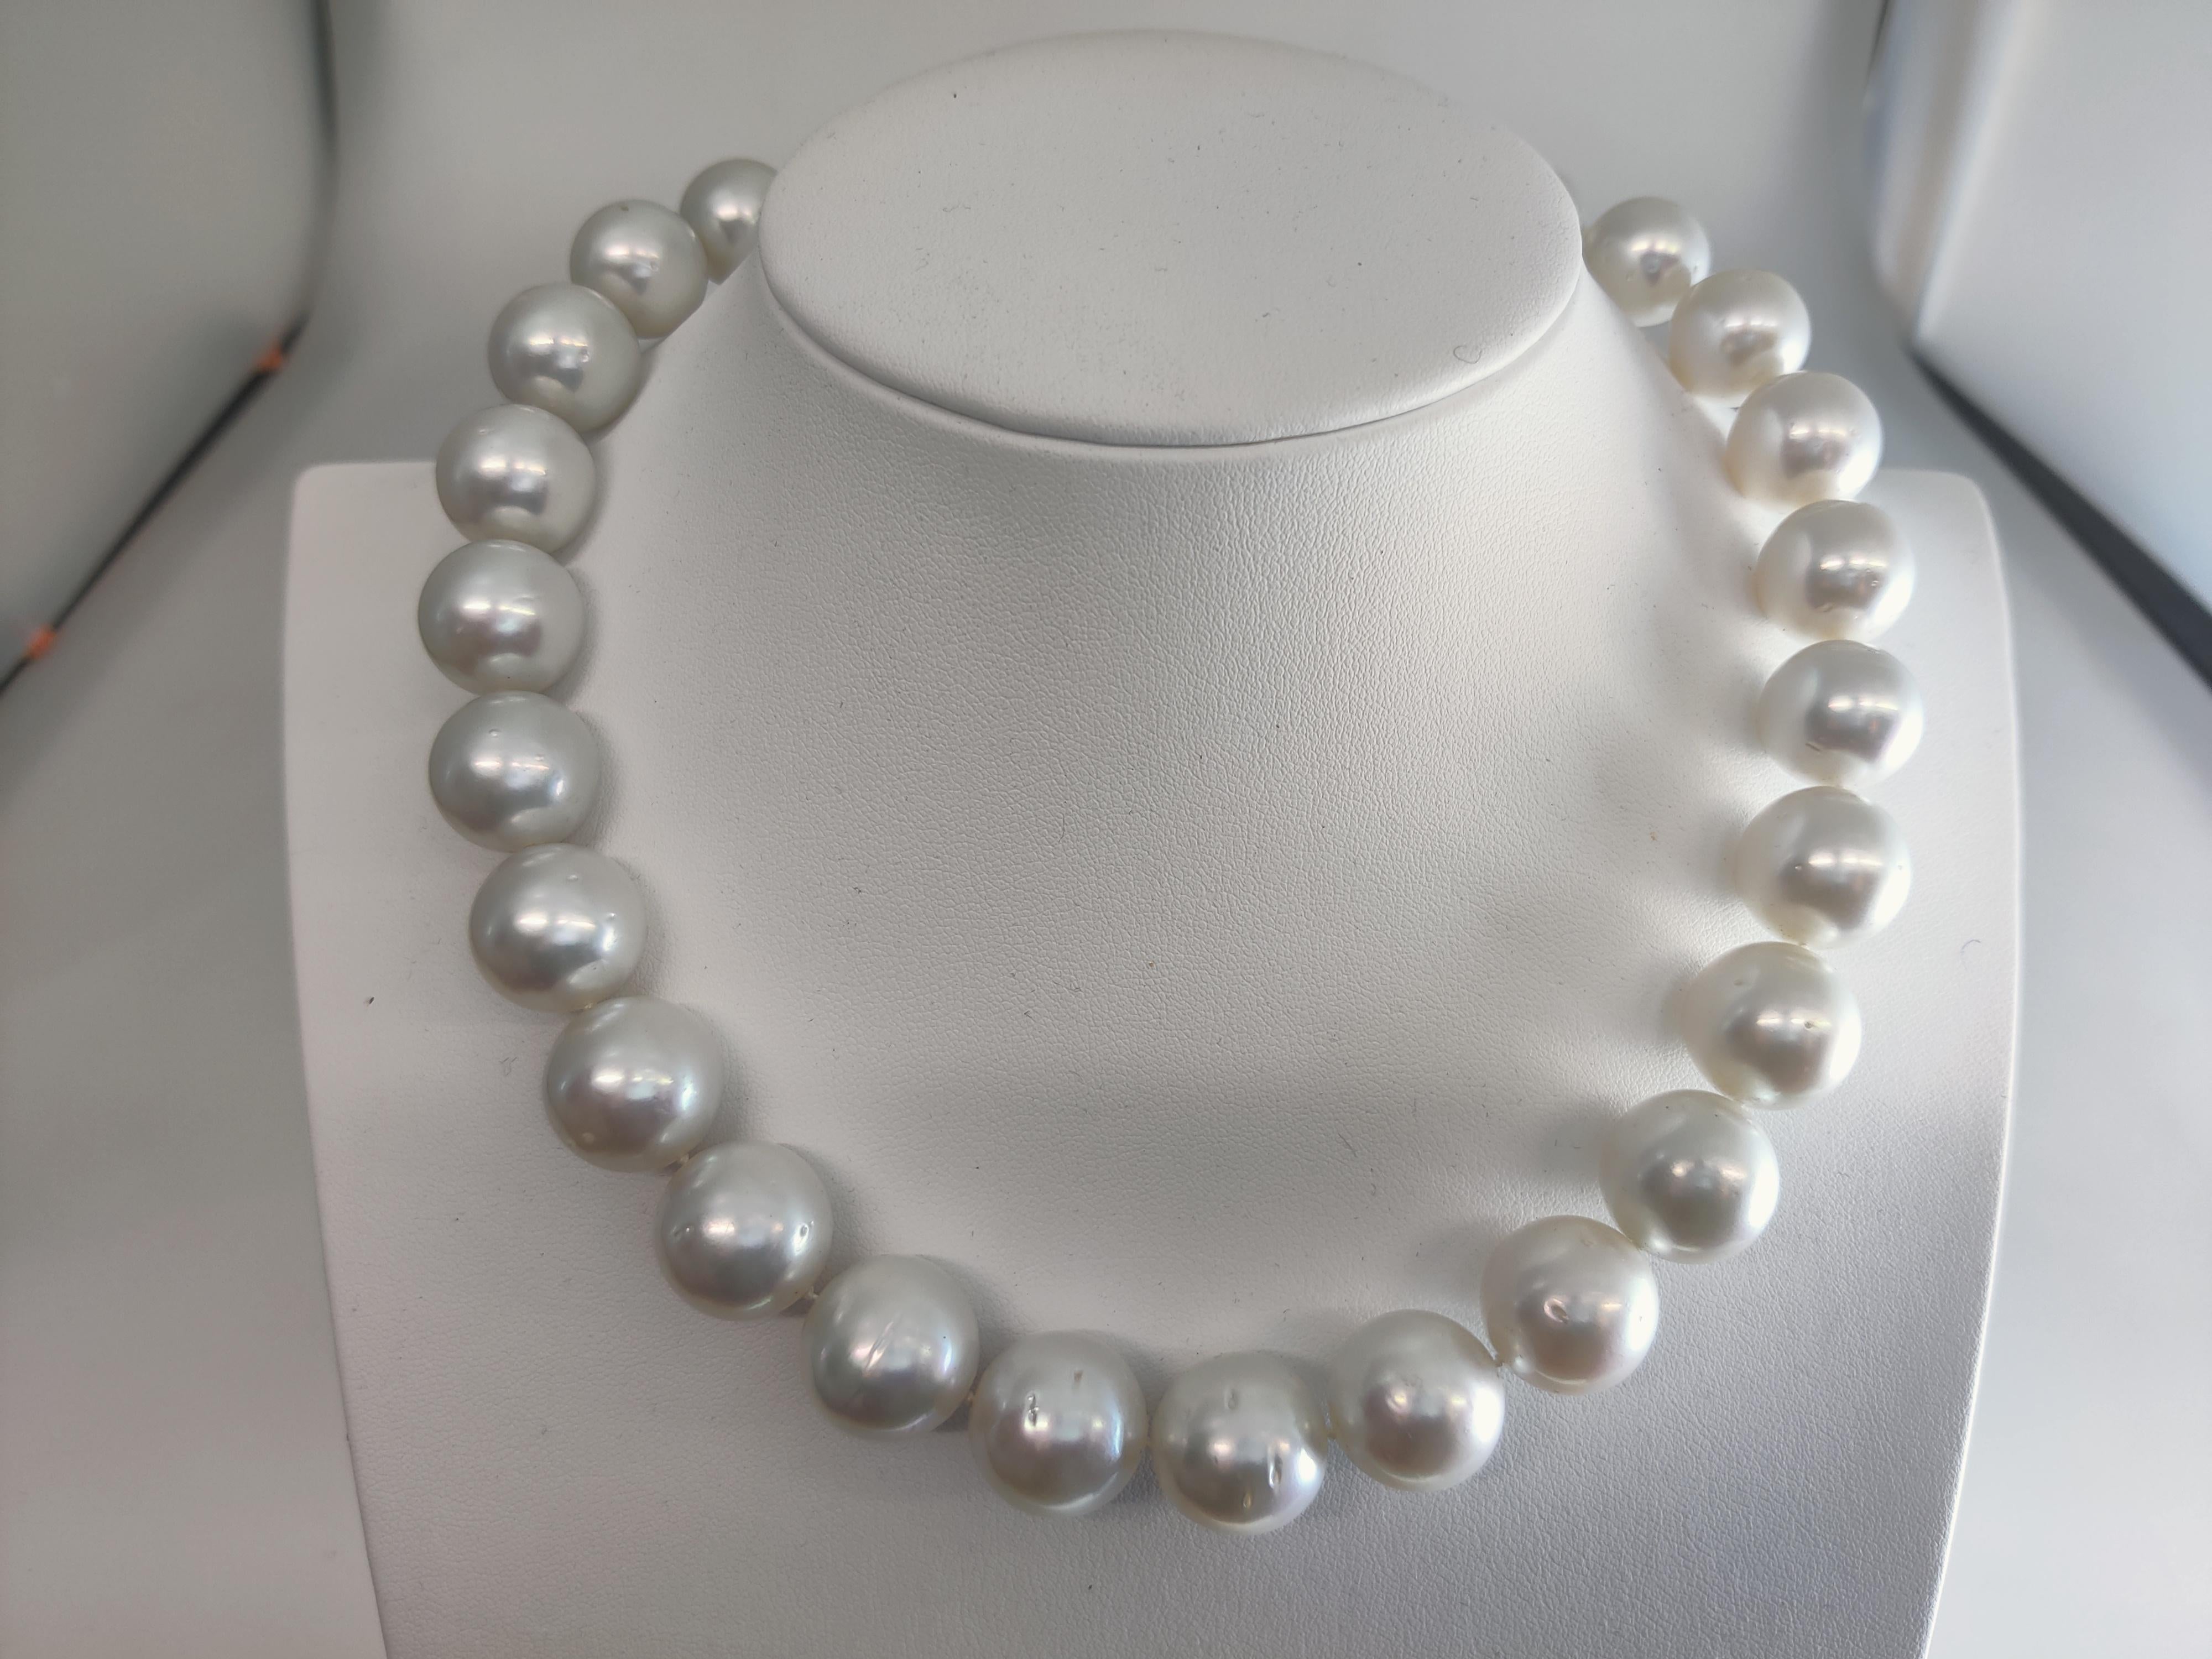 closure 18 k white gold diameter 13 mm diamonds
27 south sea pearls diameter from 12 to 15 mm
47 cm long
160,65 grams

